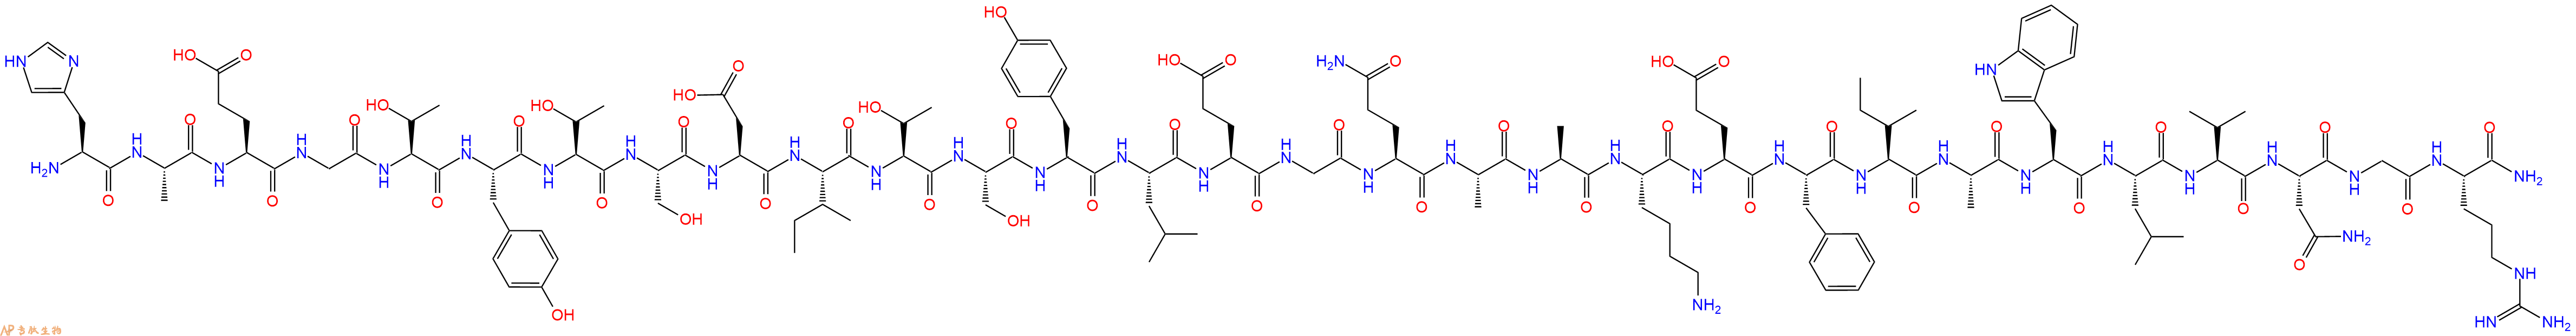 专肽生物产品GLP-1(7-36), amide, chicken, commonturkey1802078-26-7